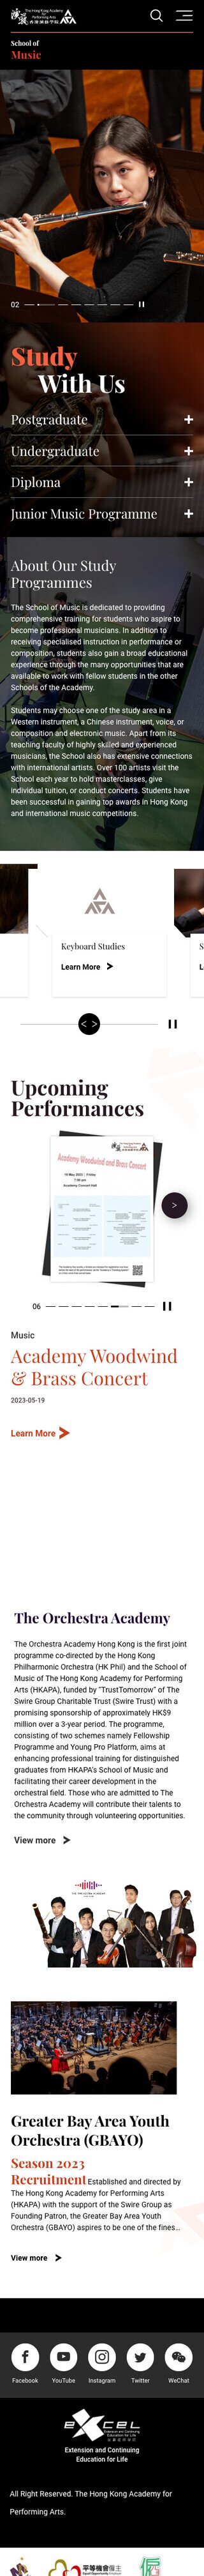 HKAPA School of Music Homepage - Mobile